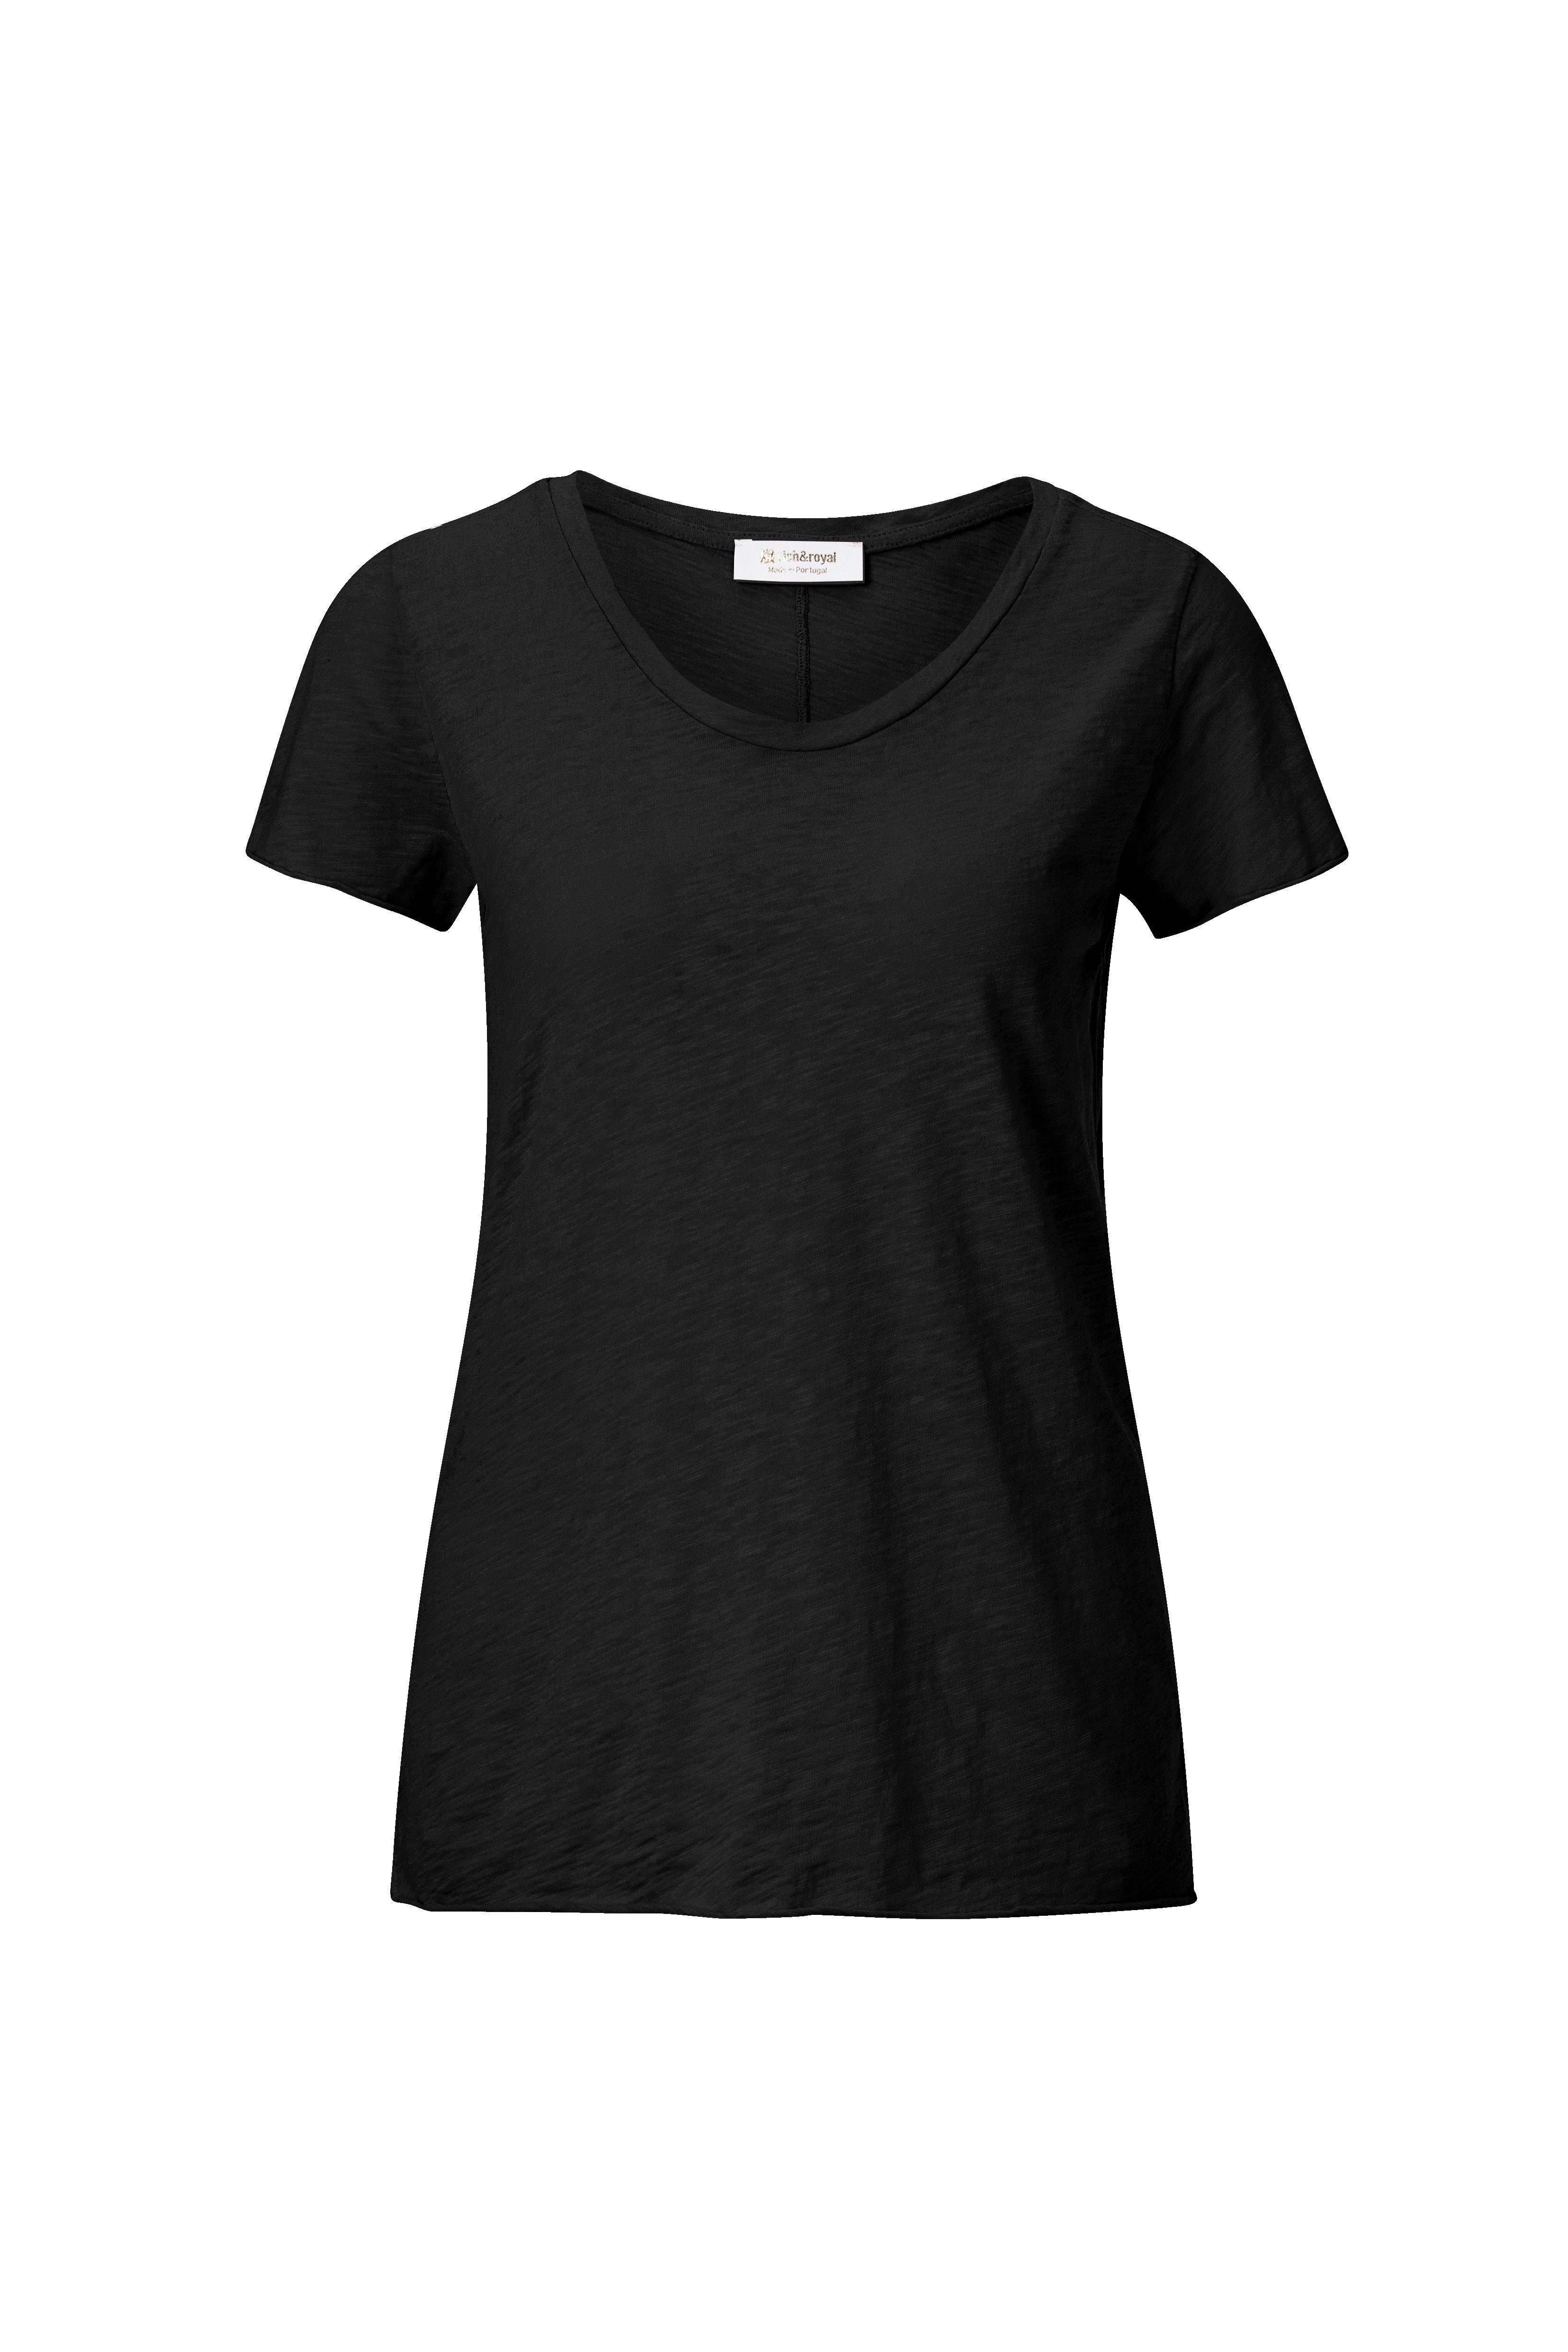 Rich & Royal femininer black T-Shirt in Basic-Form